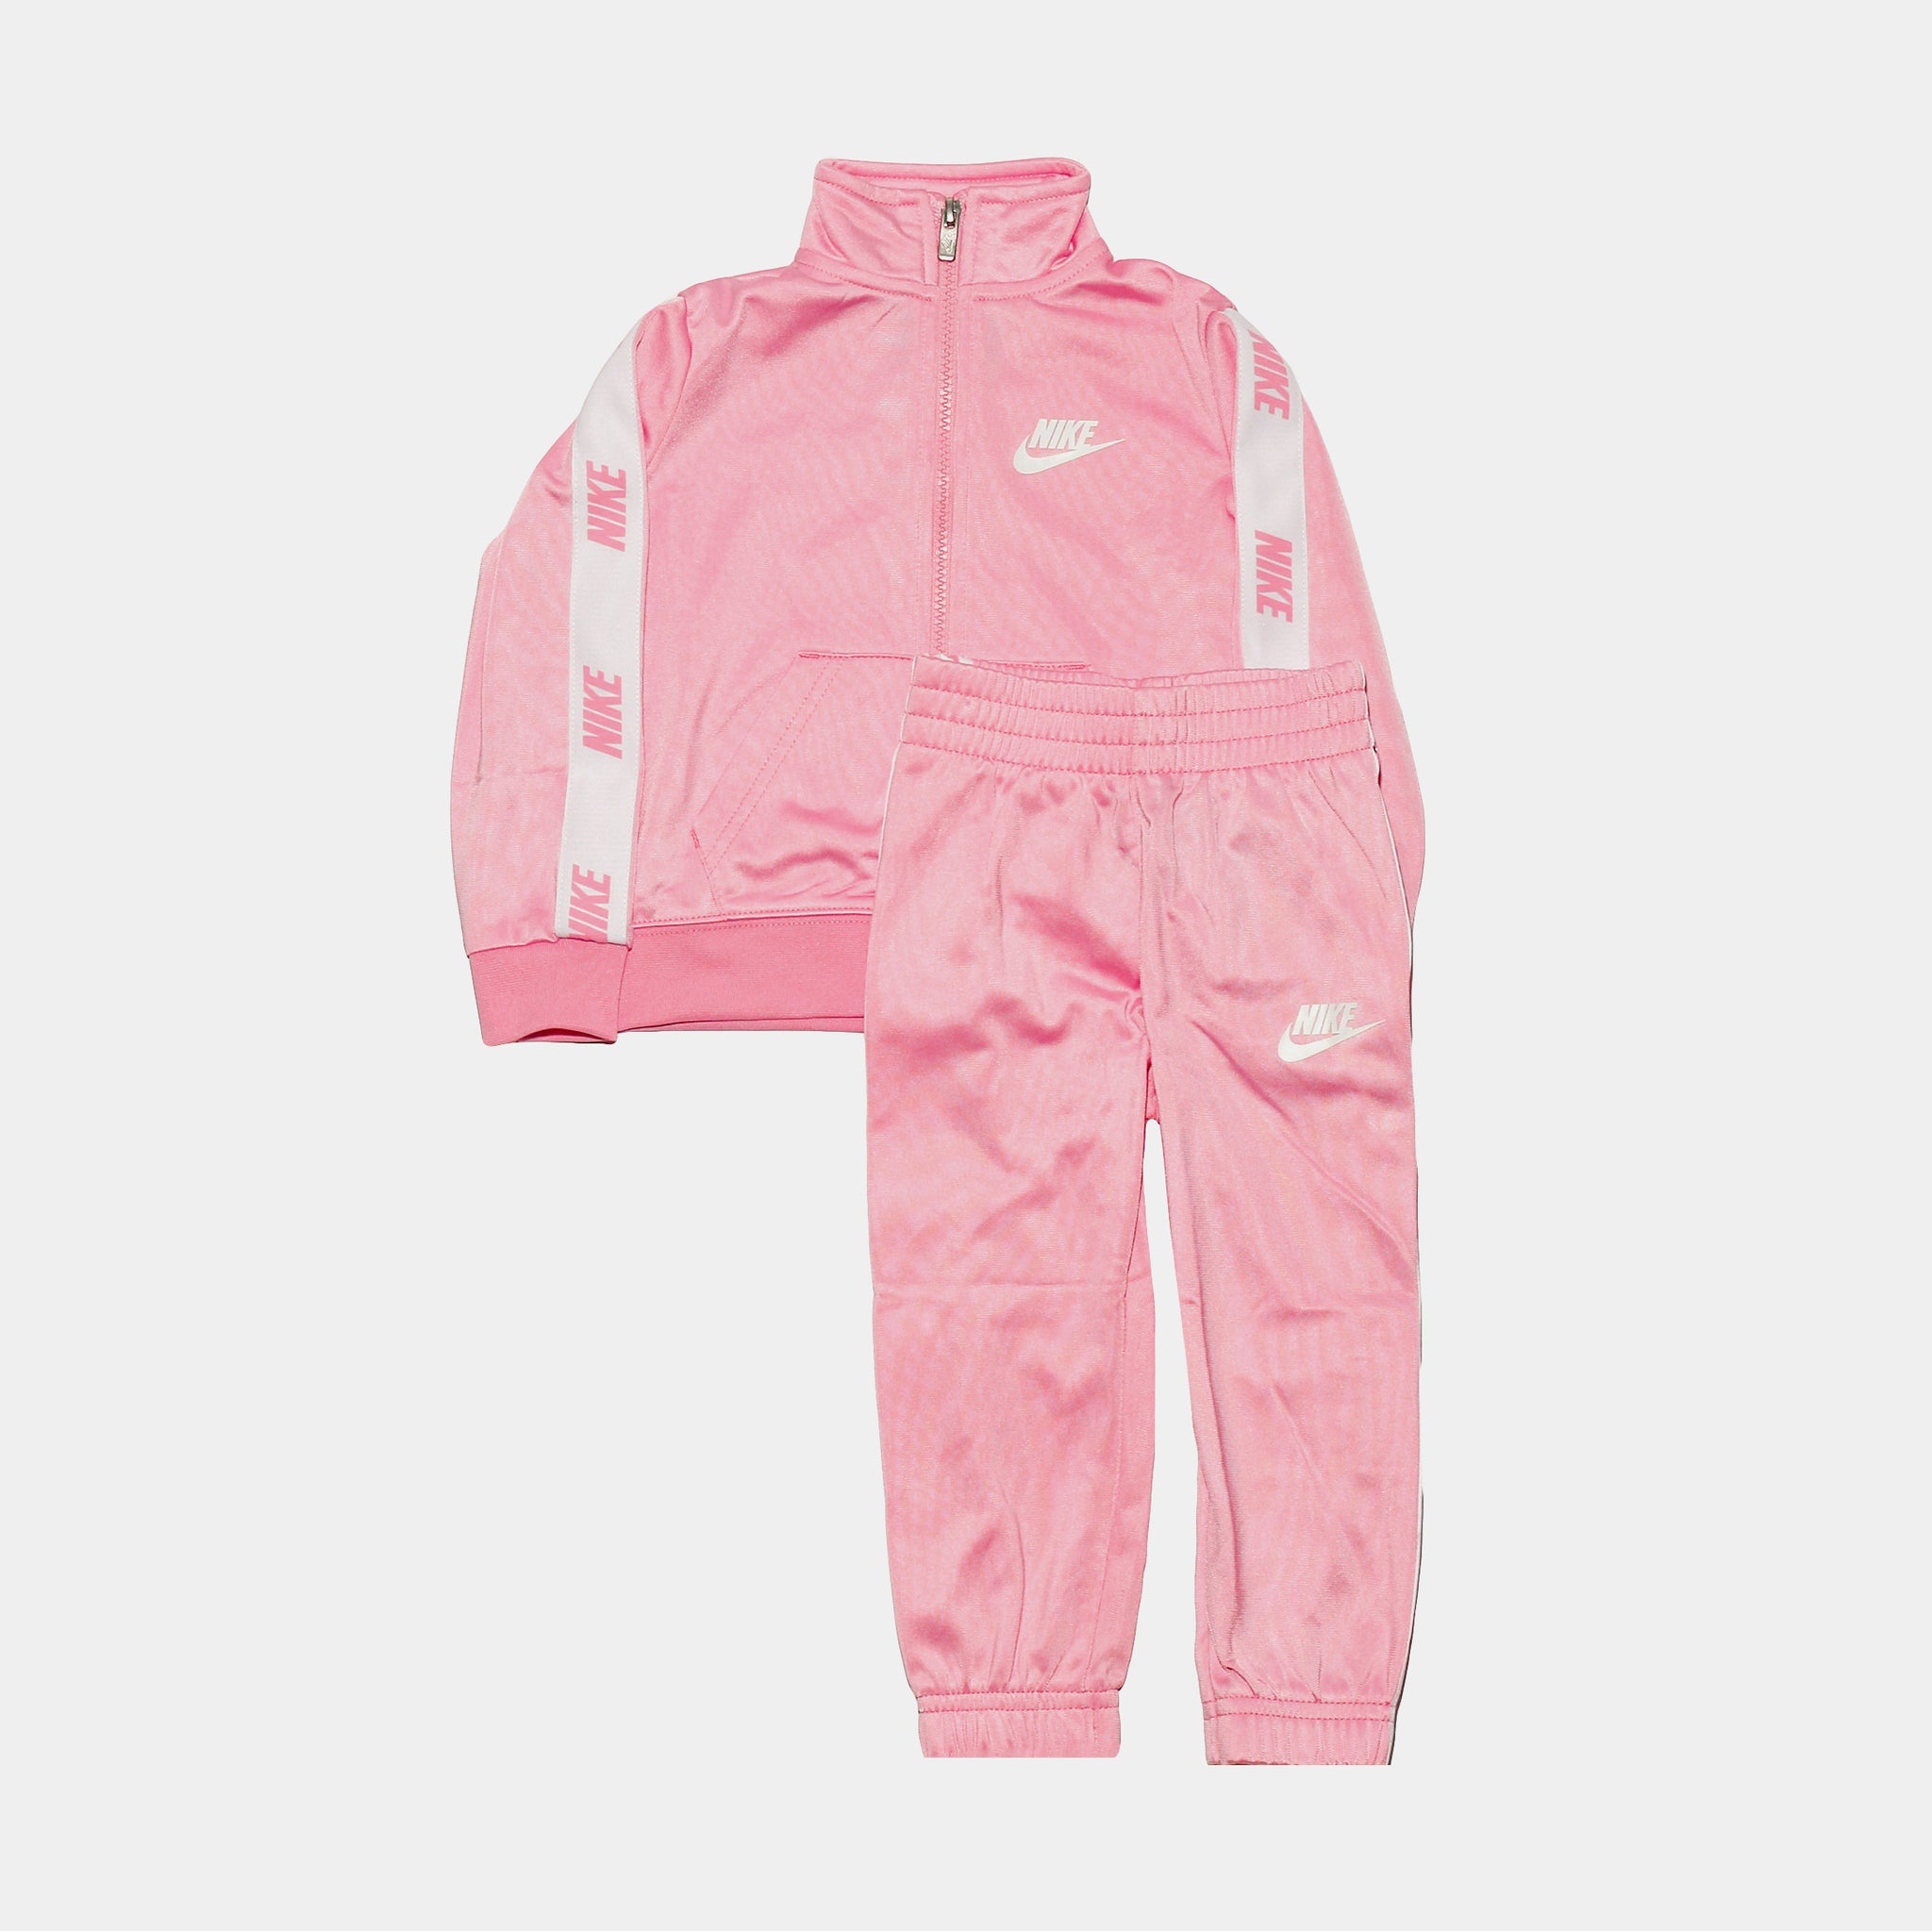 Nike NSW Tricot Set Toddler Set Pink 26G796-A8F – Shoe Palace